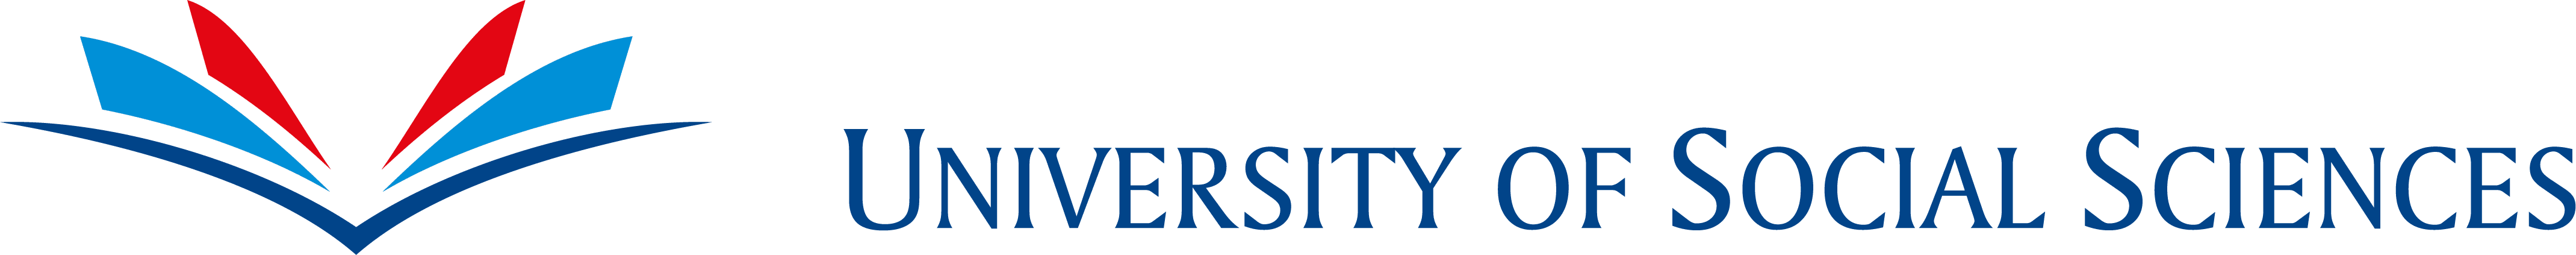 Authorities  - University of Social Sciences - University of Social Sciences - University of SAN